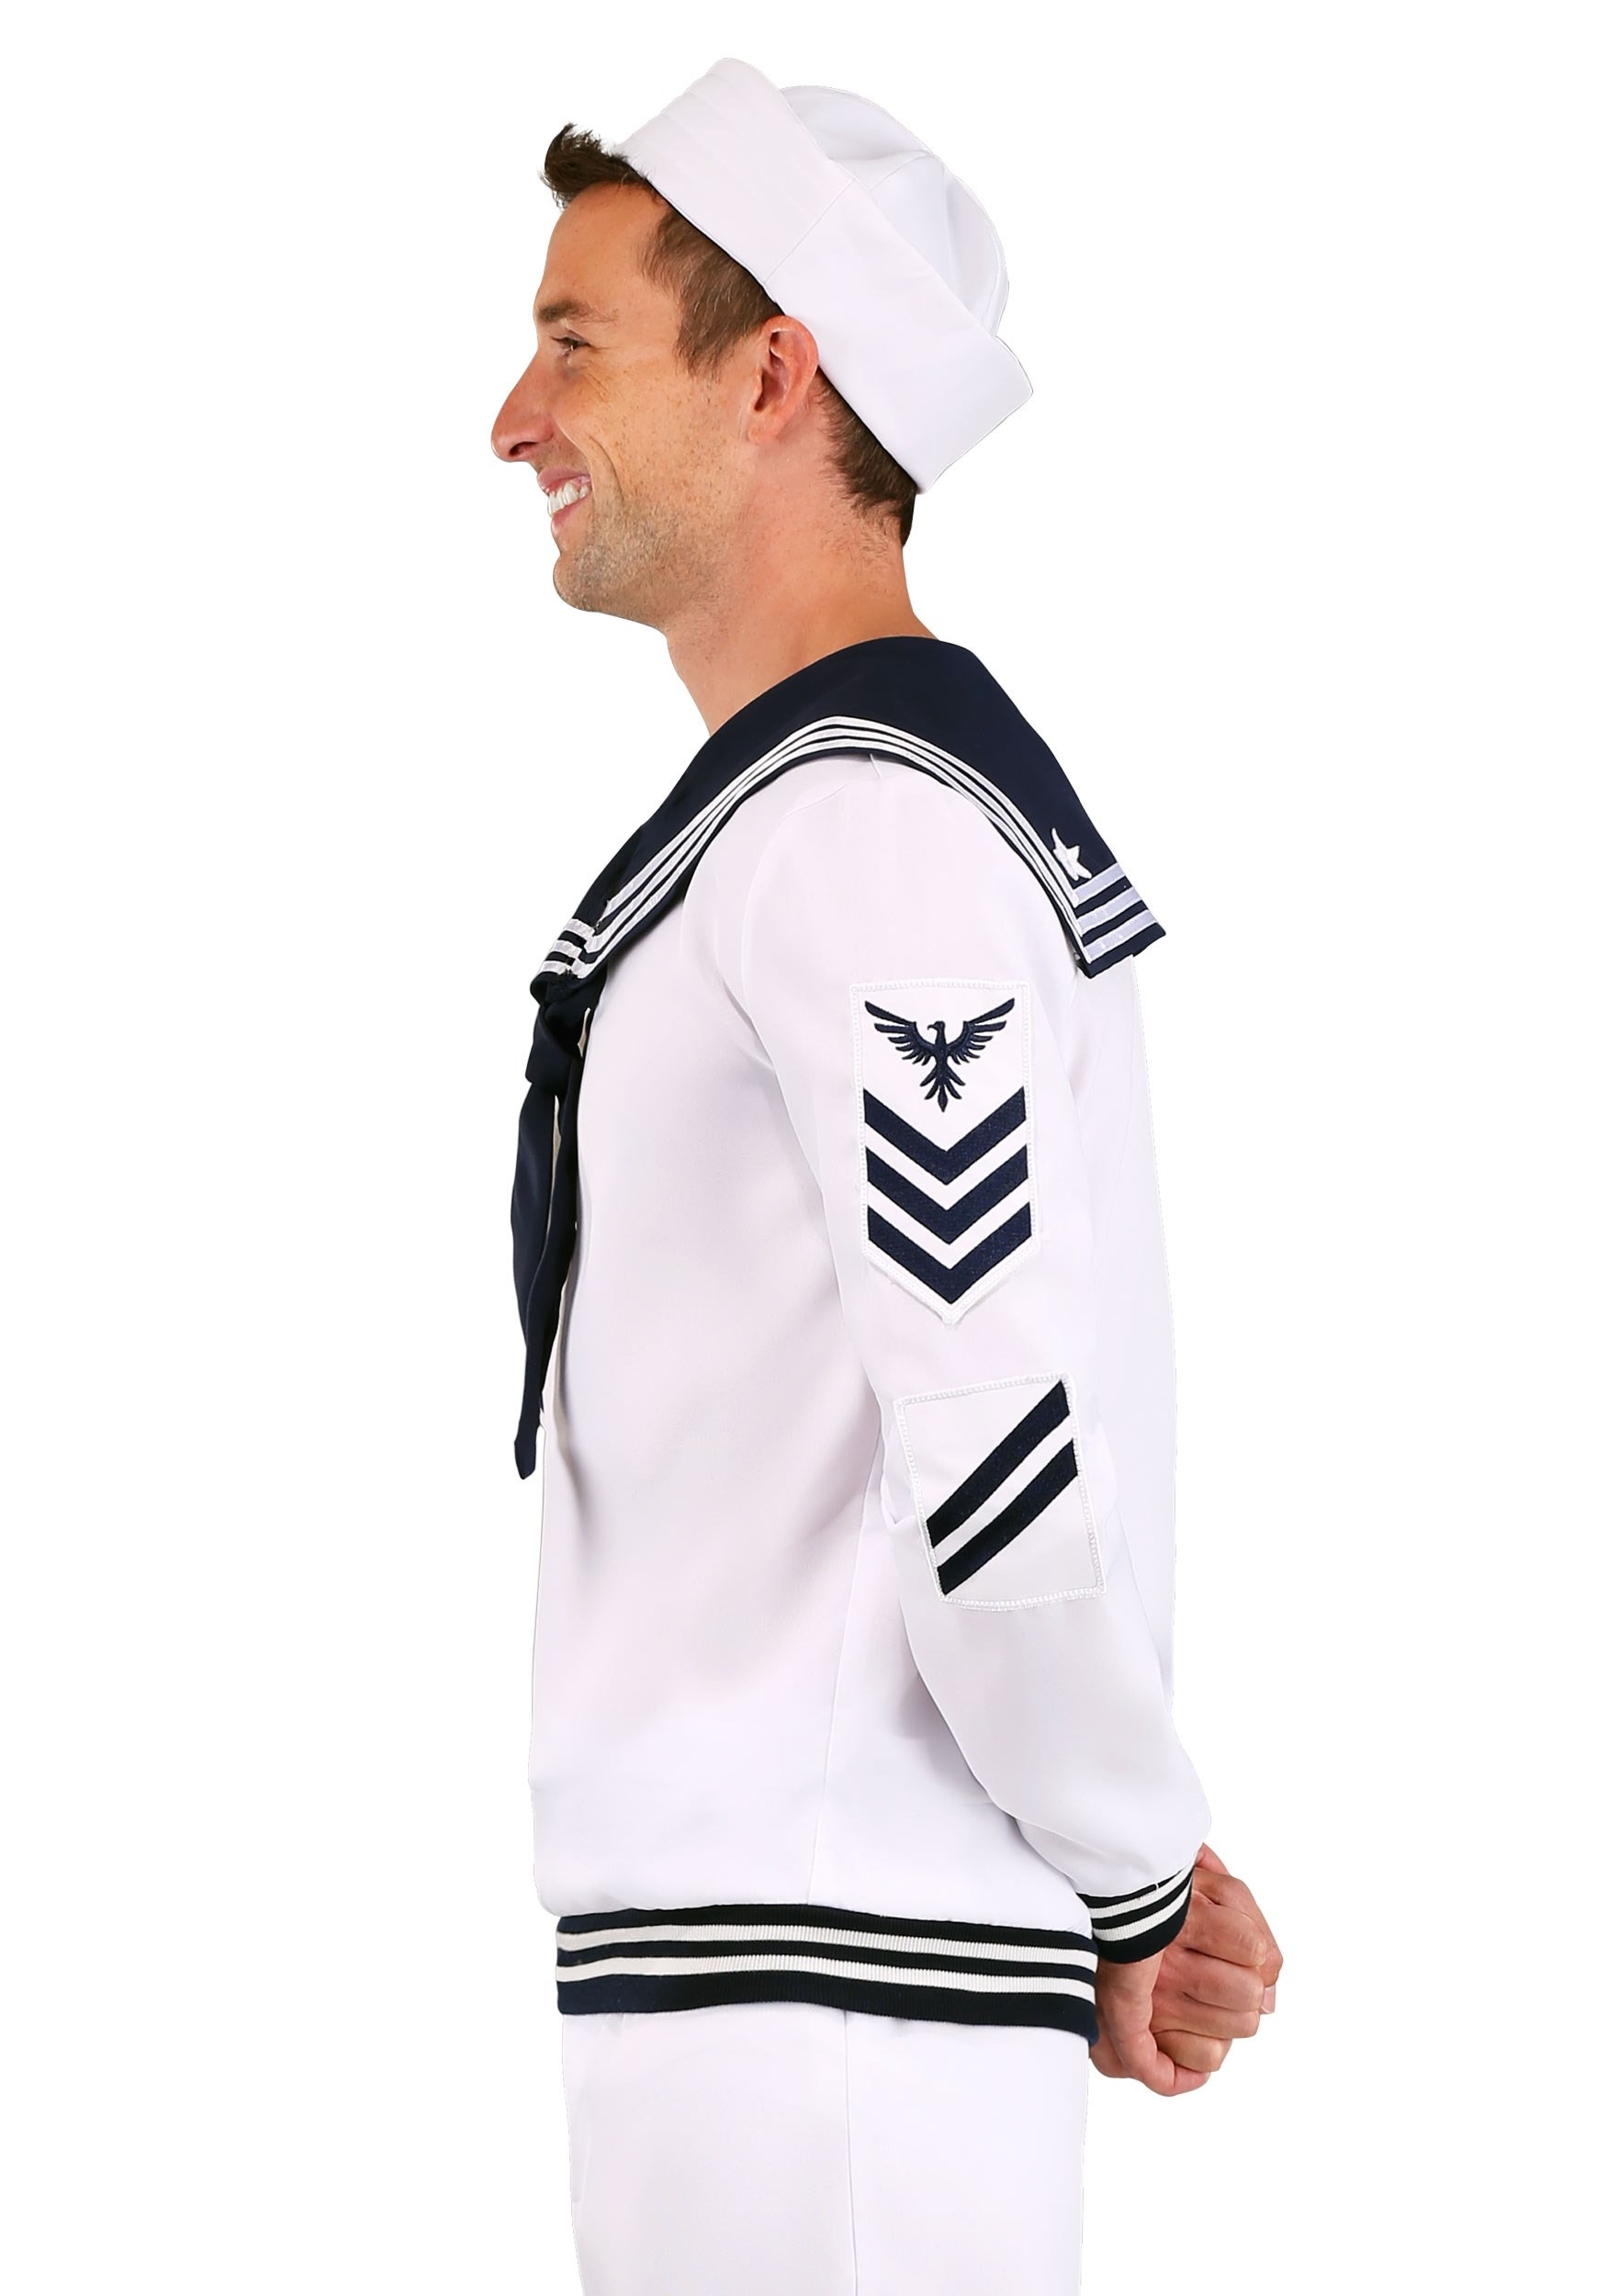 Deckhand Sailor Costume For Men